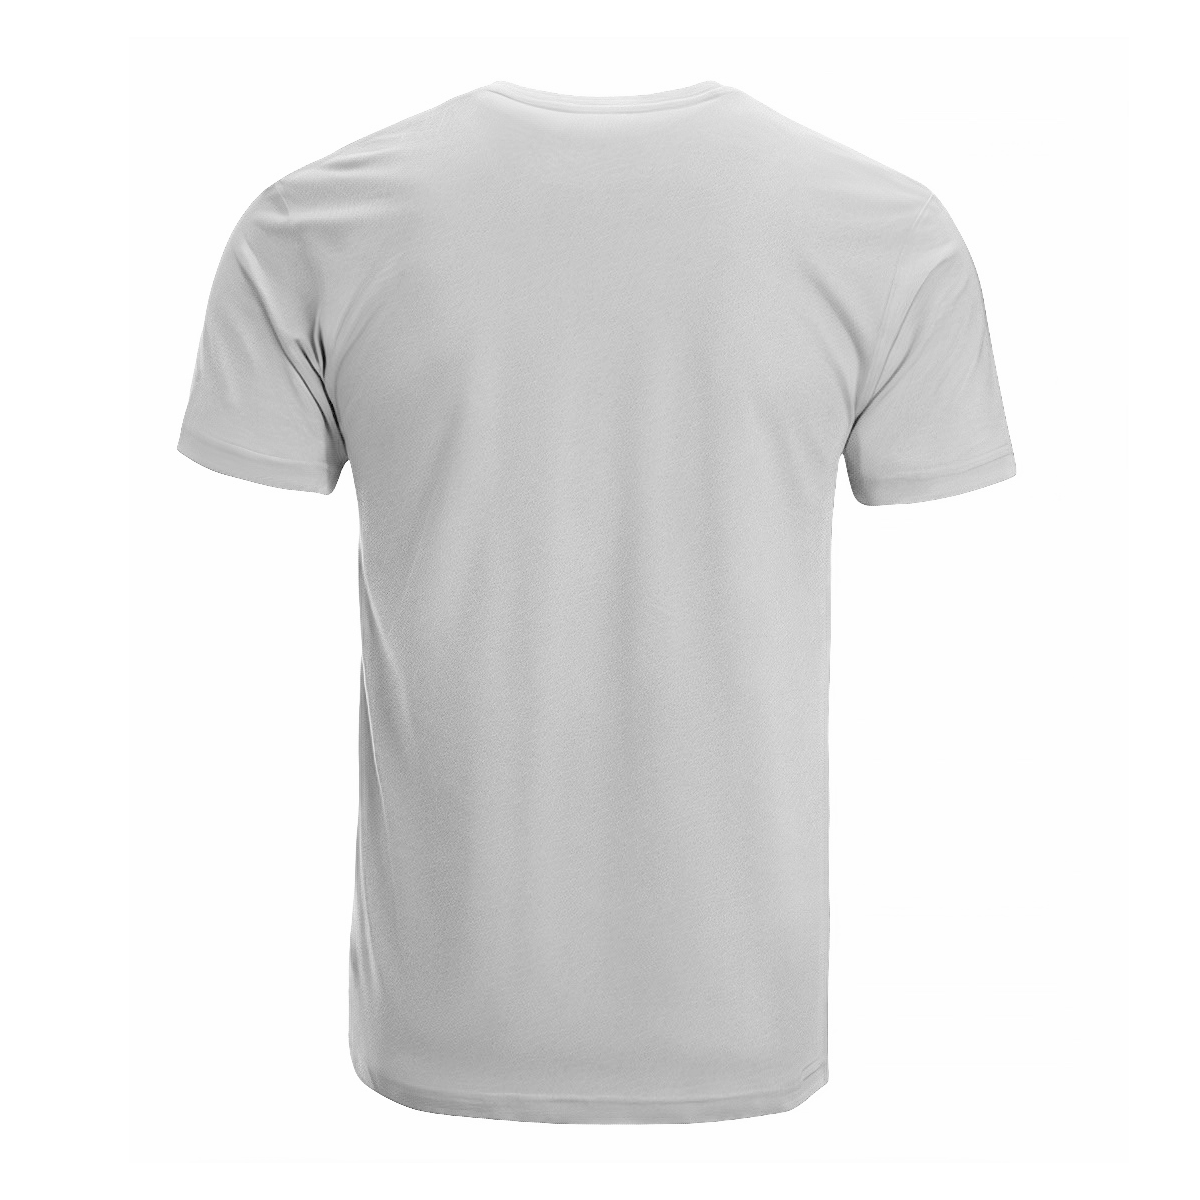 Halkett Tartan Crest T-shirt - I'm not yelling style